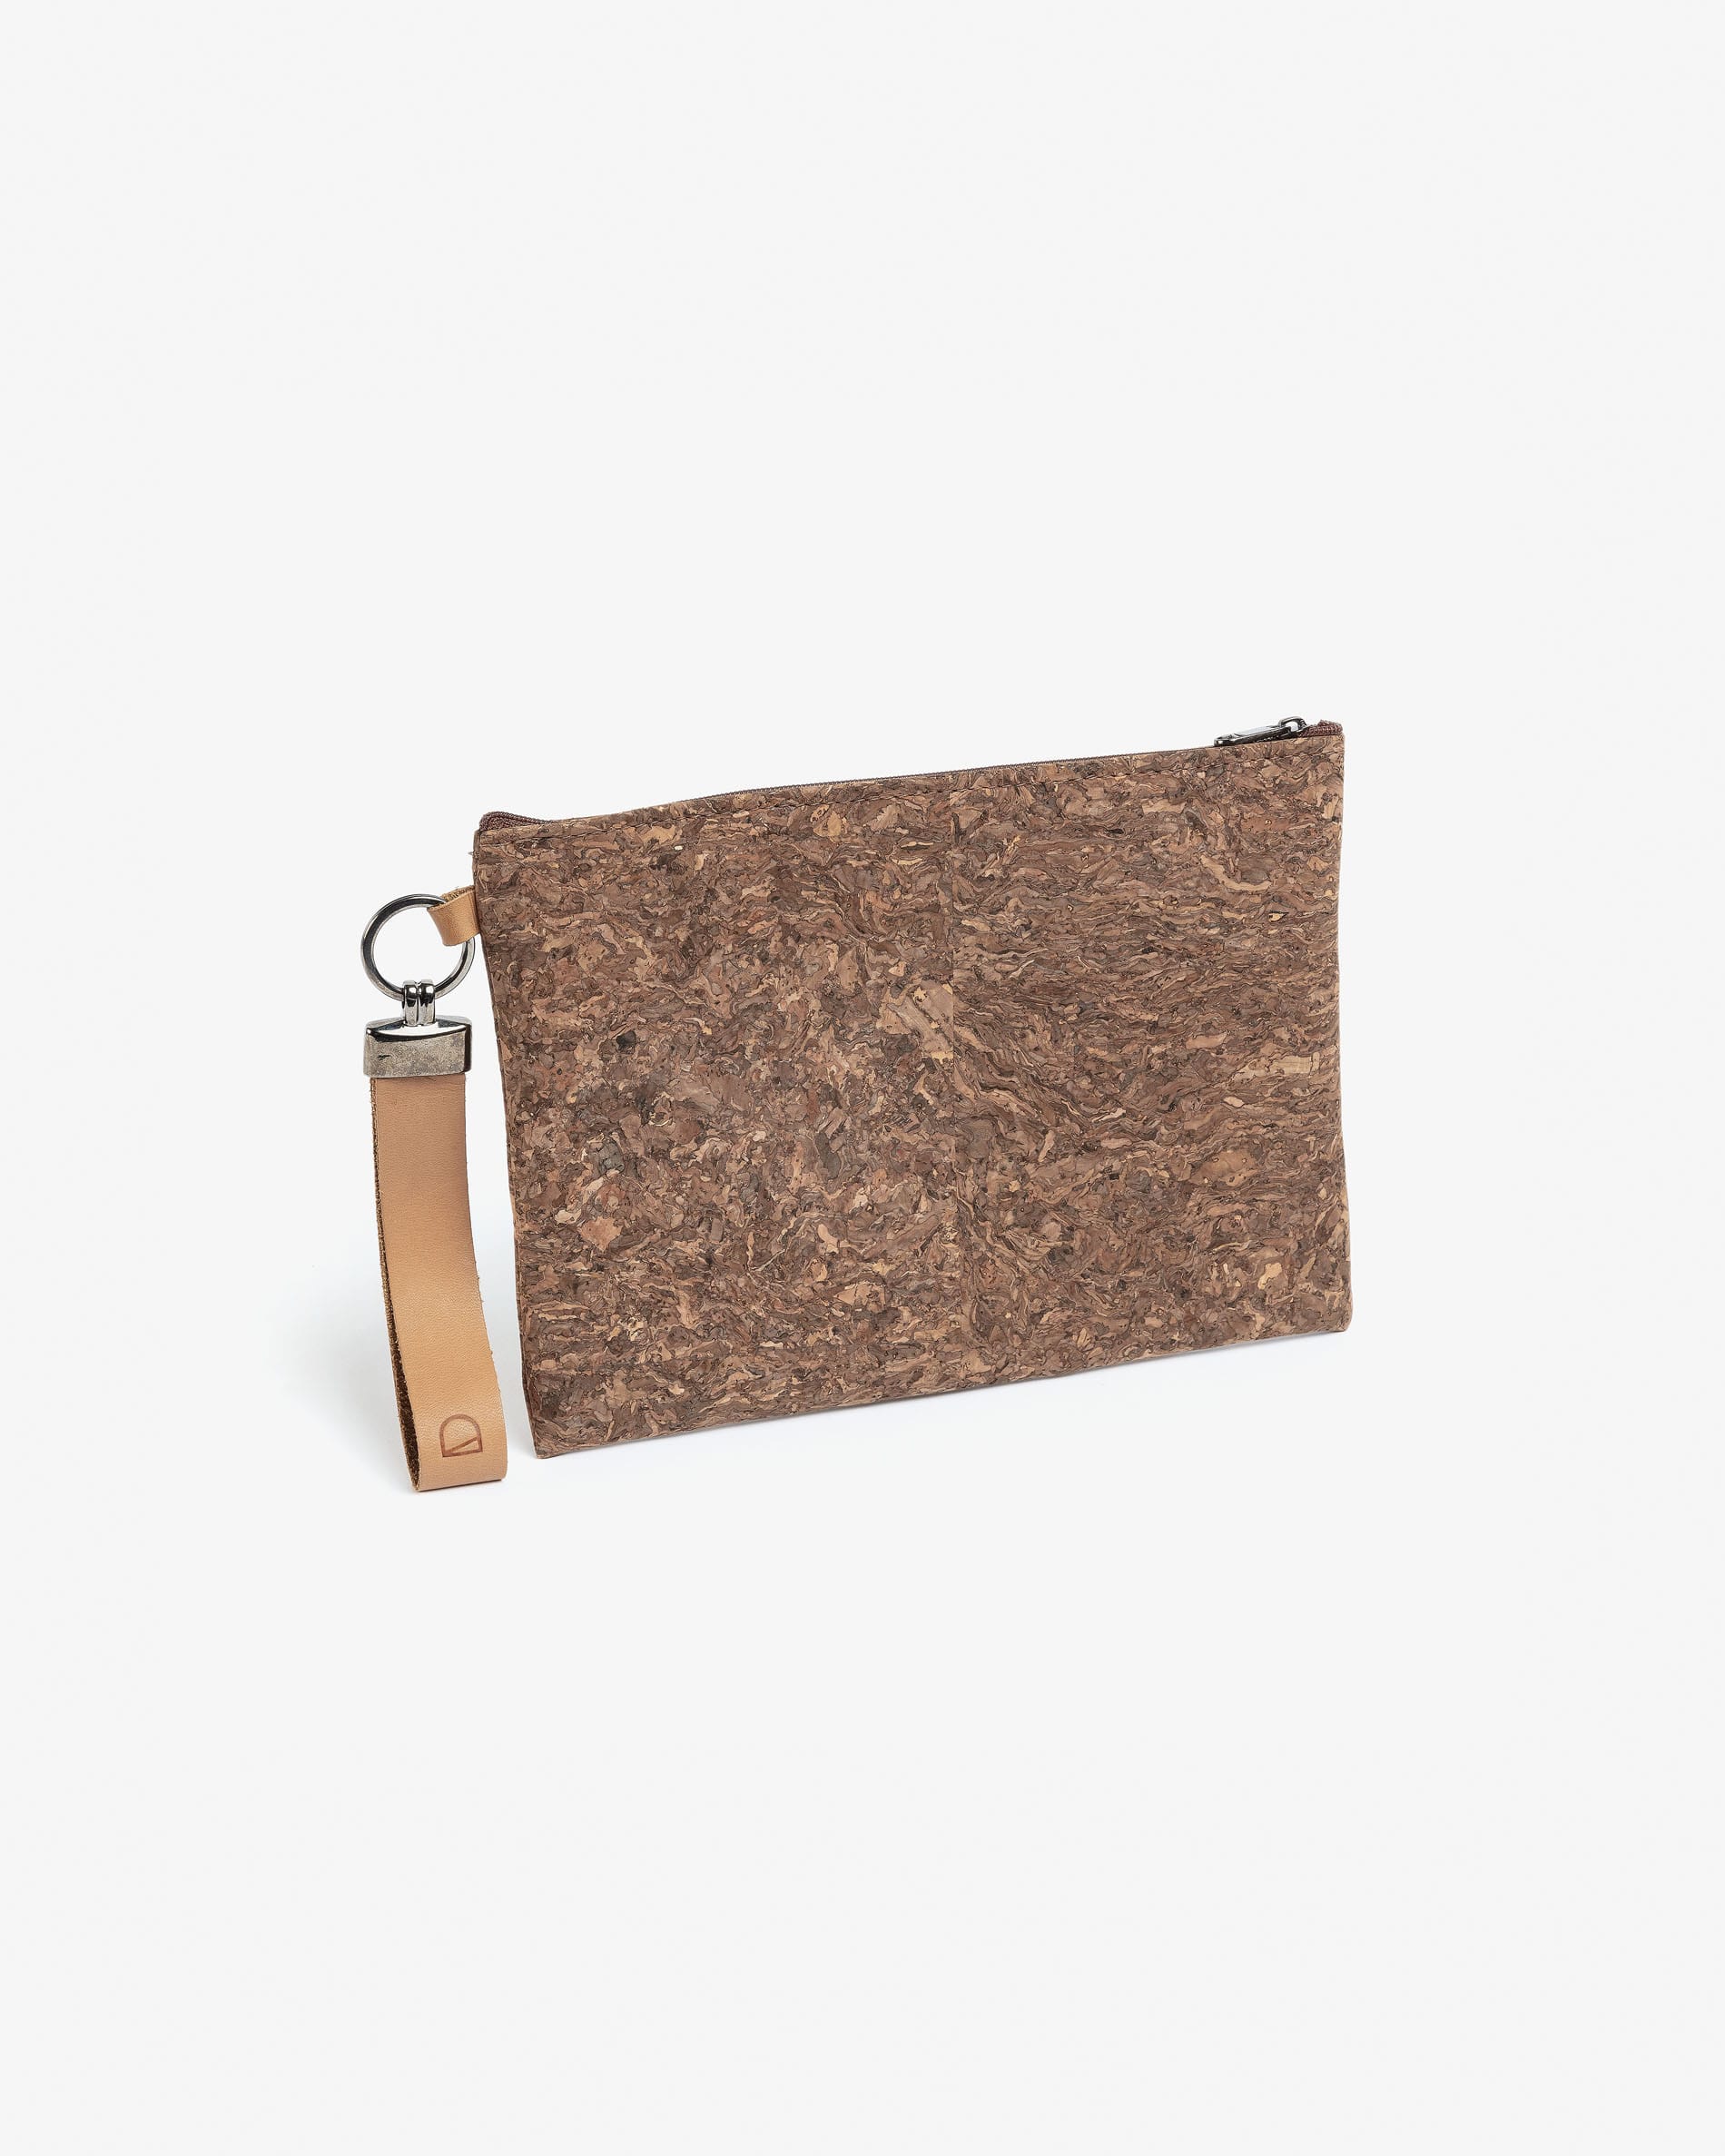 Small bag Foa dark cork with zipper